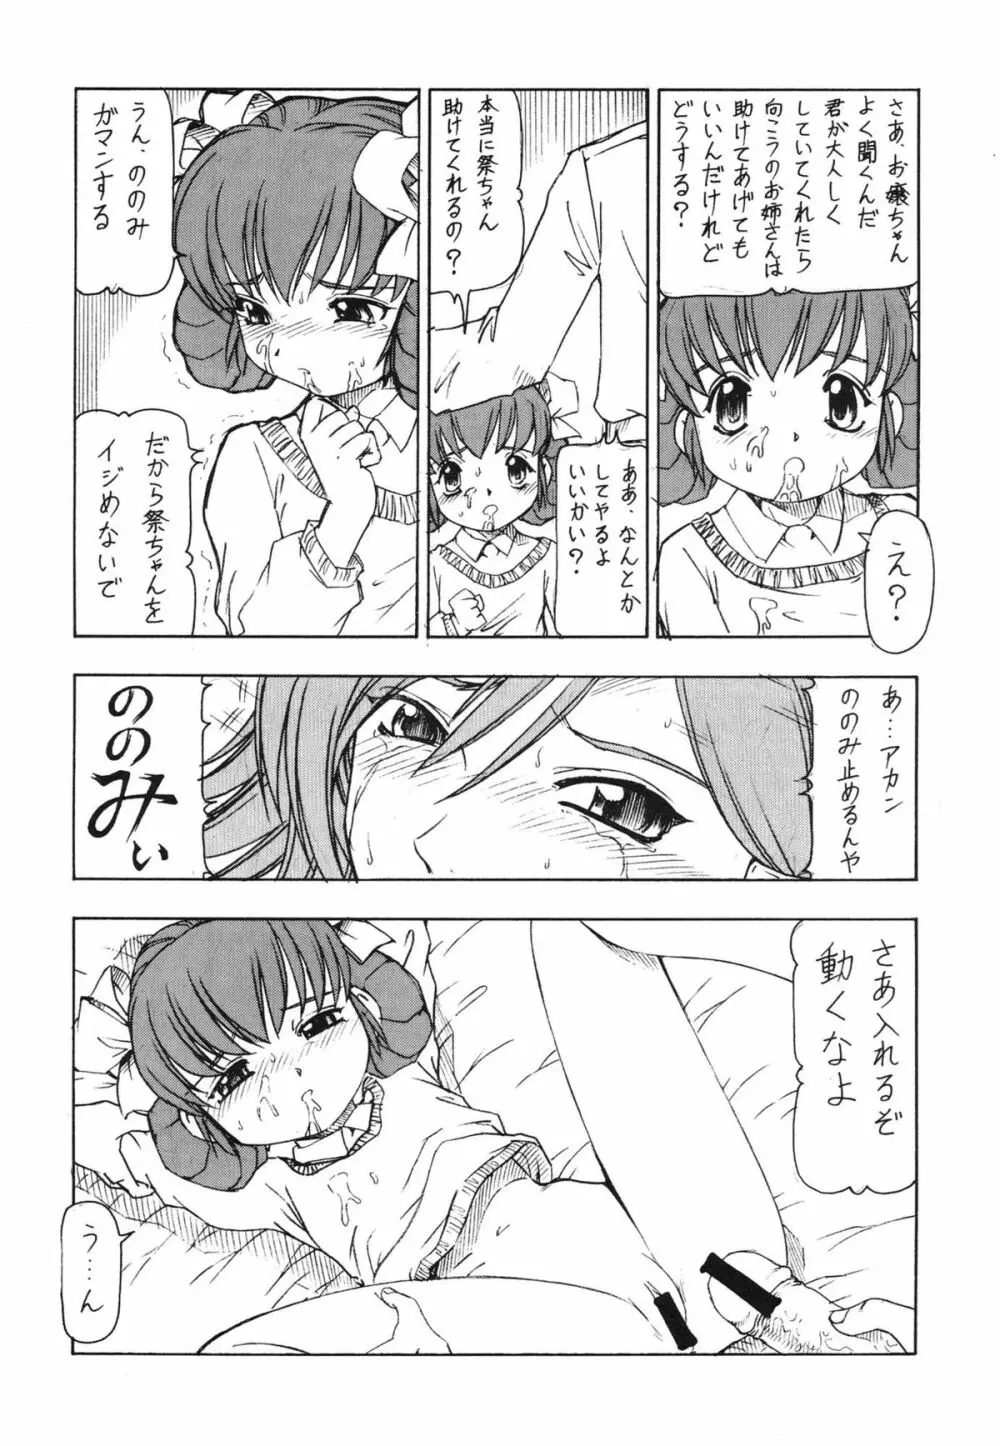 GPM.XXX ANIMATION 萌葱色の涙 TEAR DROPS 38ページ